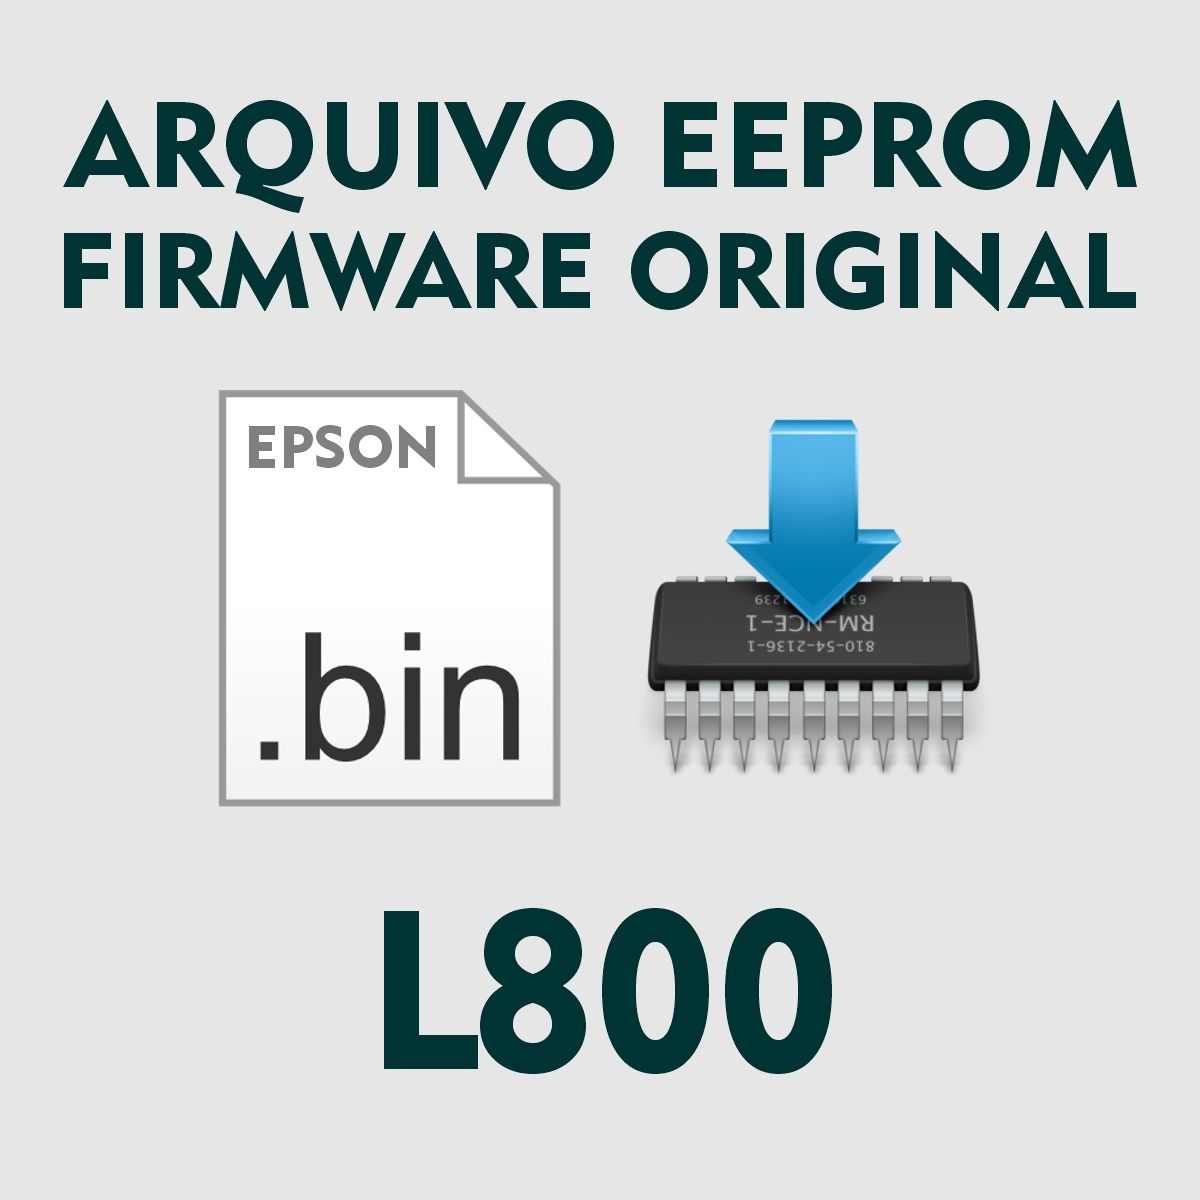 Epson L800 | Arquivo de Eeprom Firmware .bin - Original